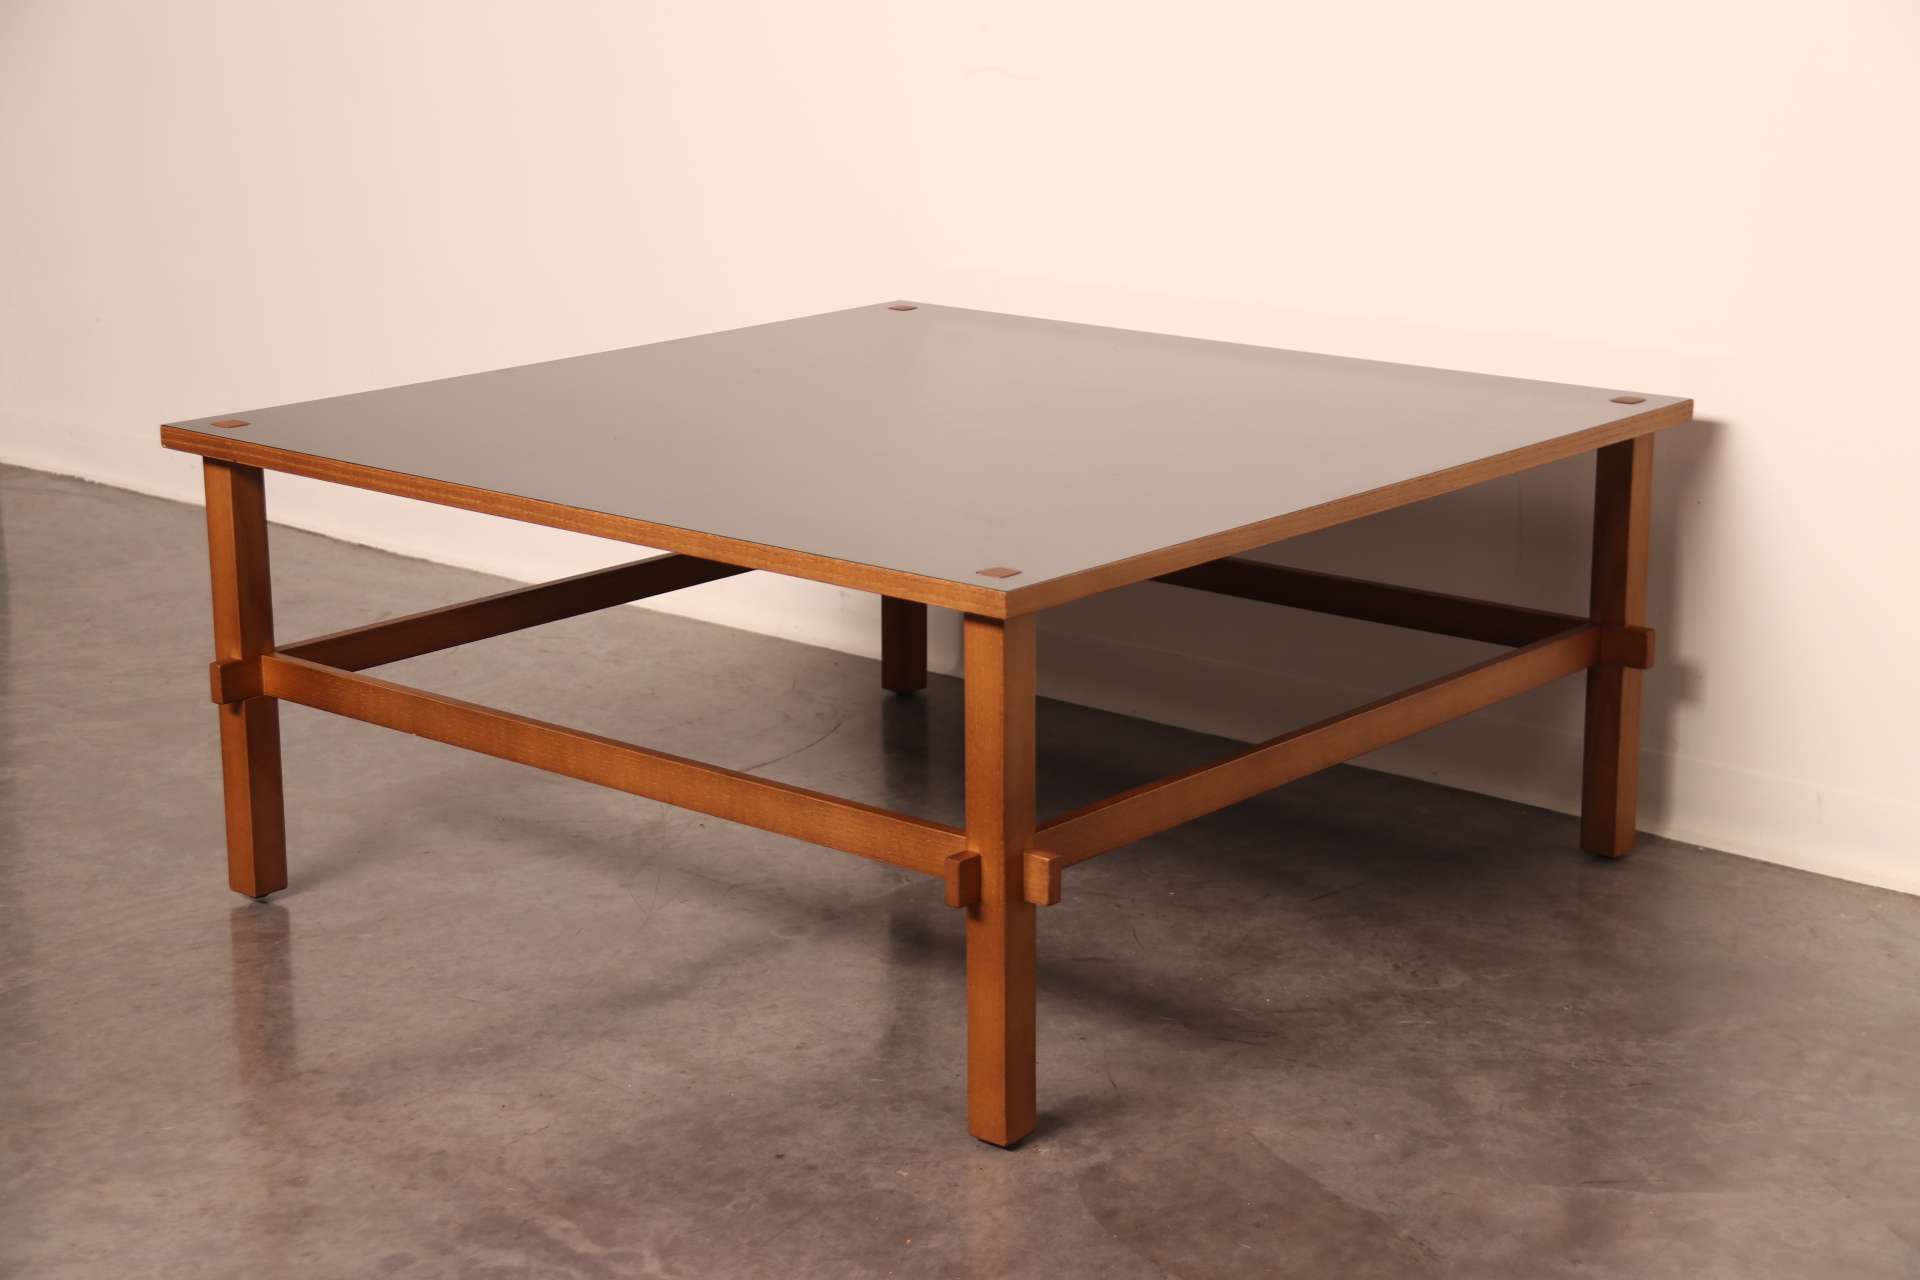 Gio coffee table design Frattini Cassina (5)